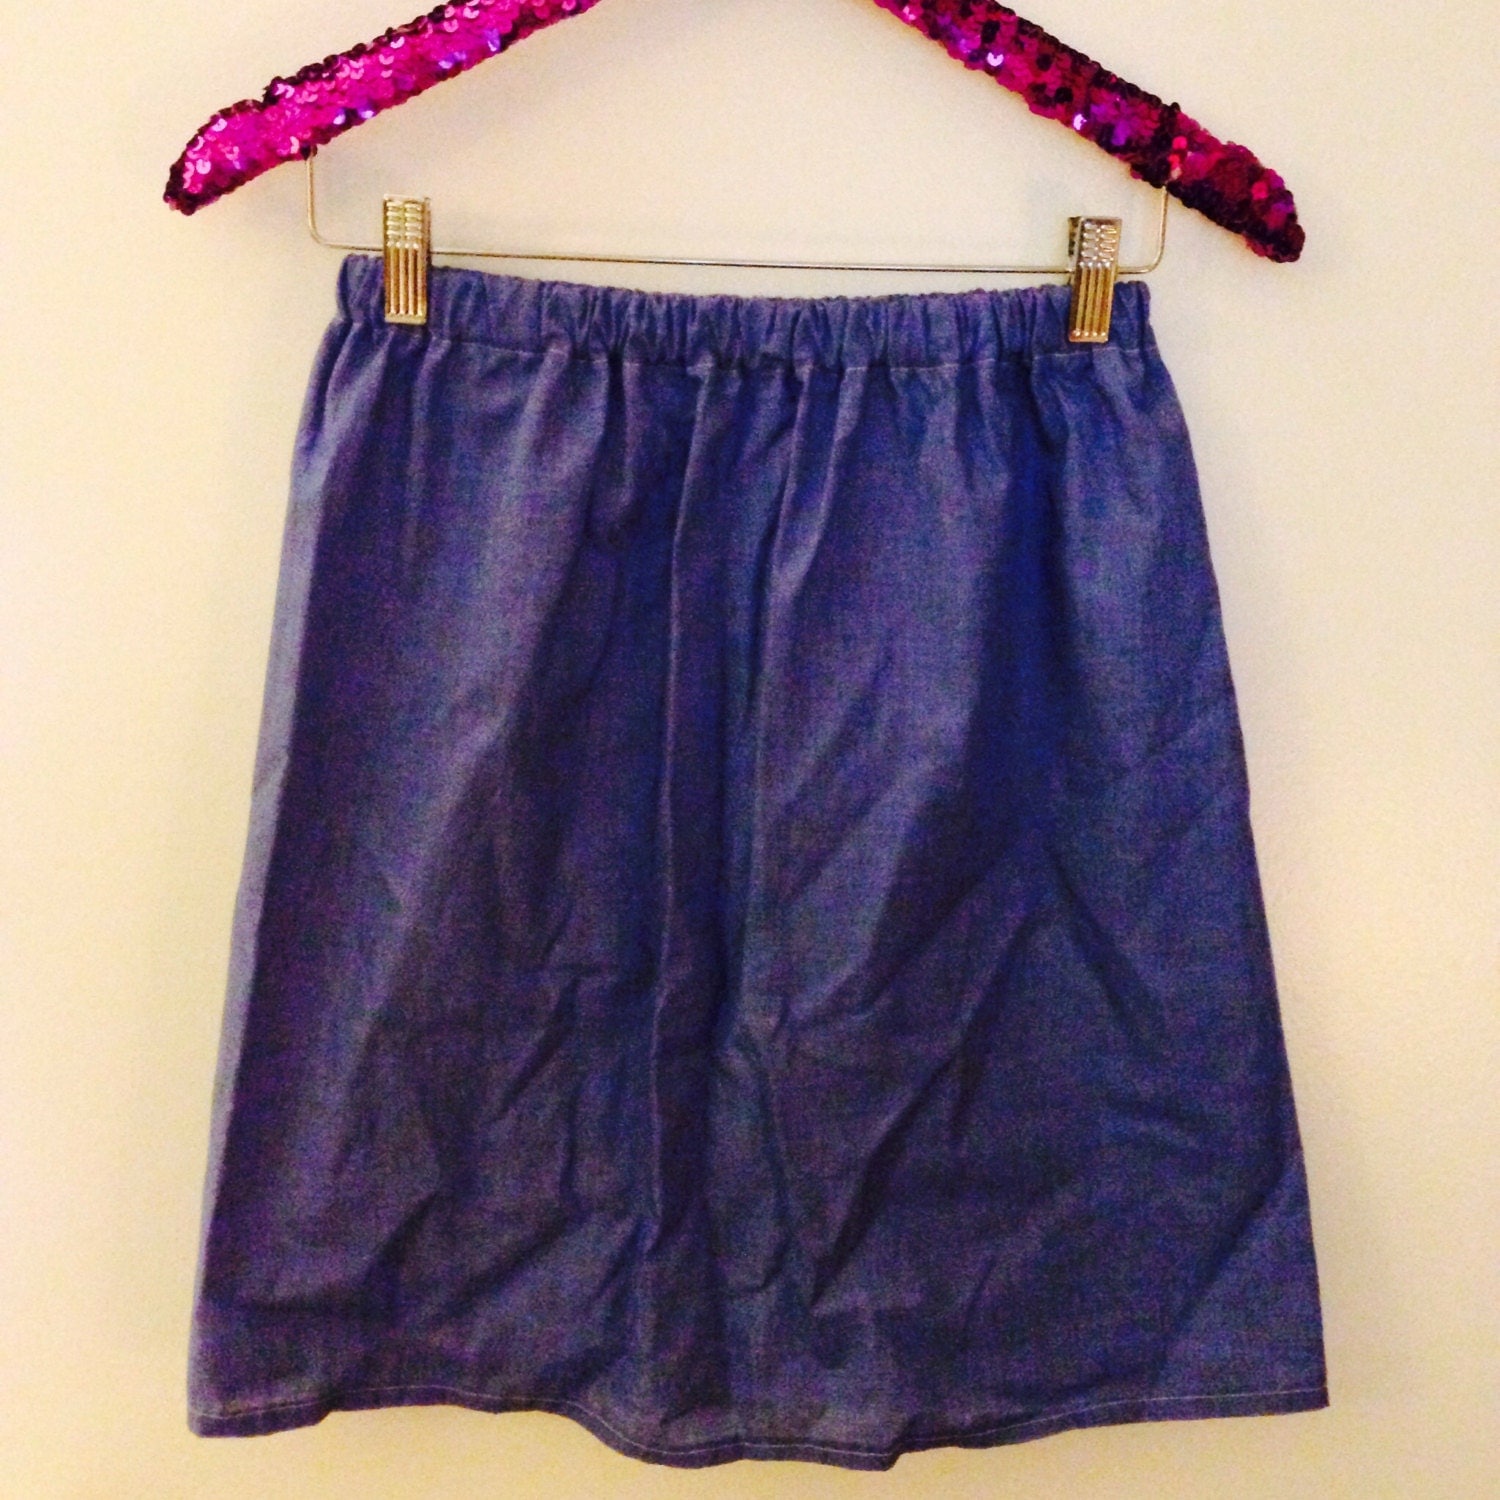 READY TO SHIP Chambray Skirt size small by PreppyPinkShop on Etsy